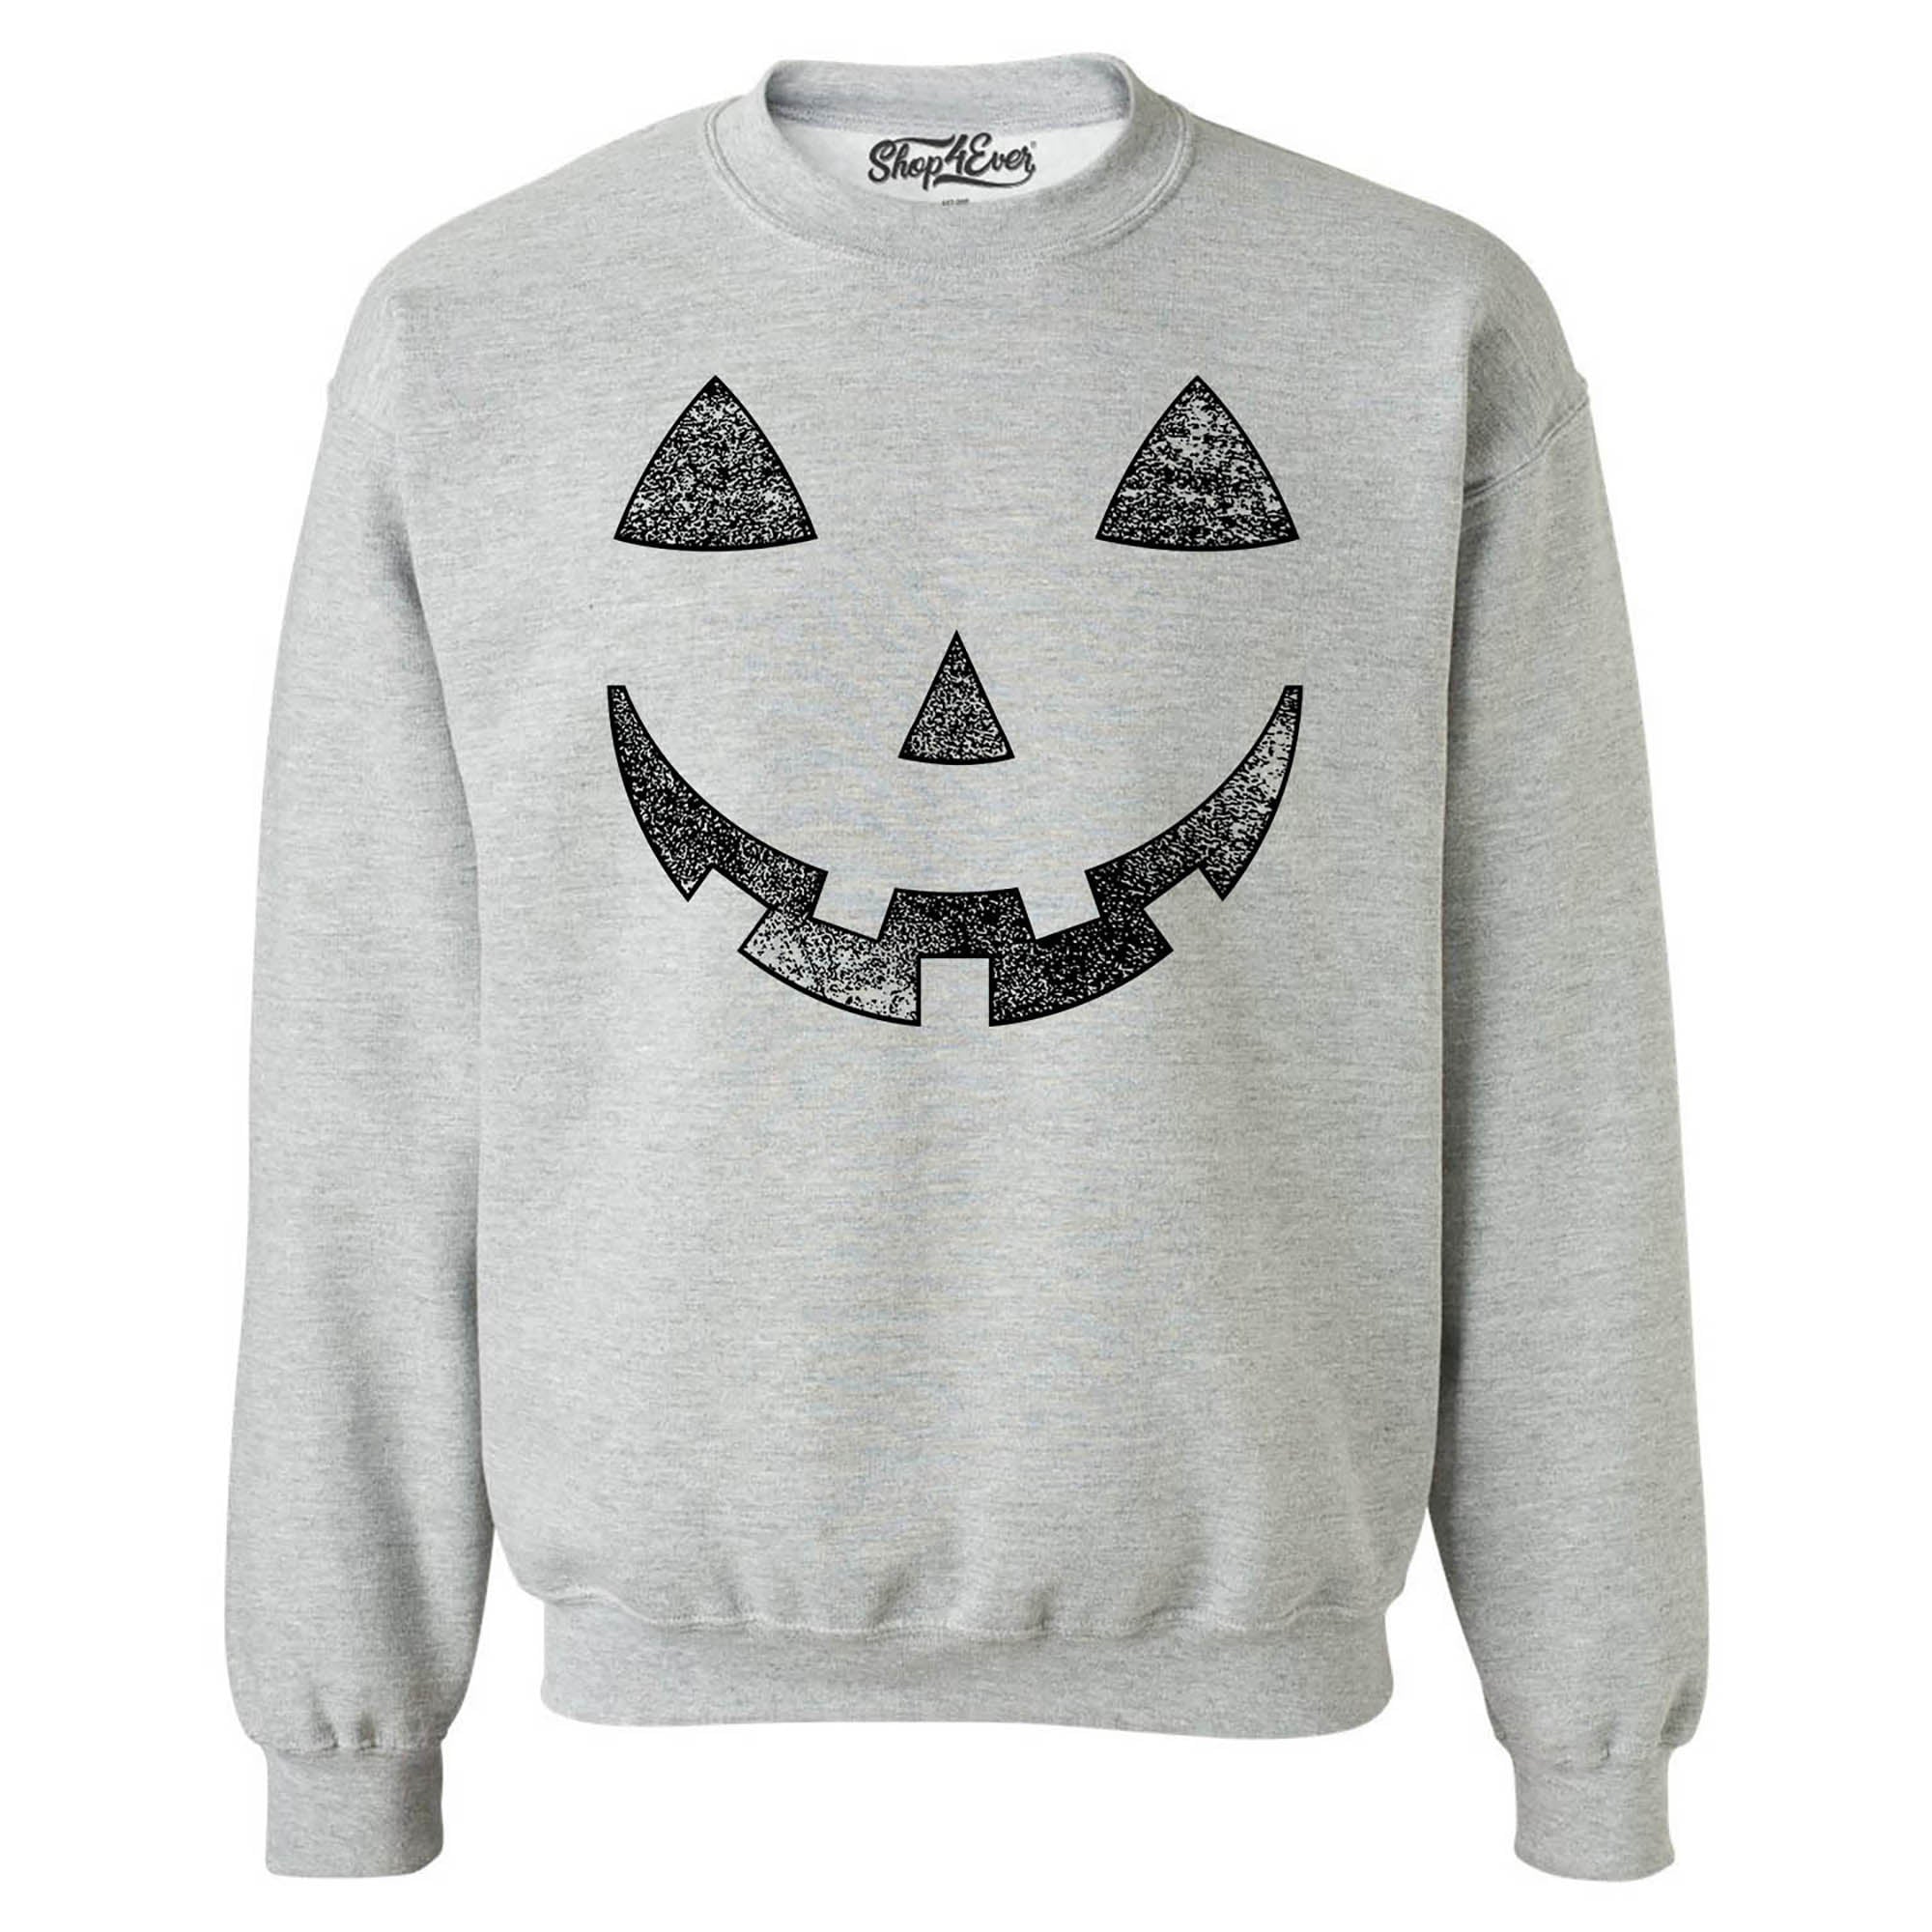 Jack O' Lantern Halloween Pumpkin Costume Crewneck Sweatshirts